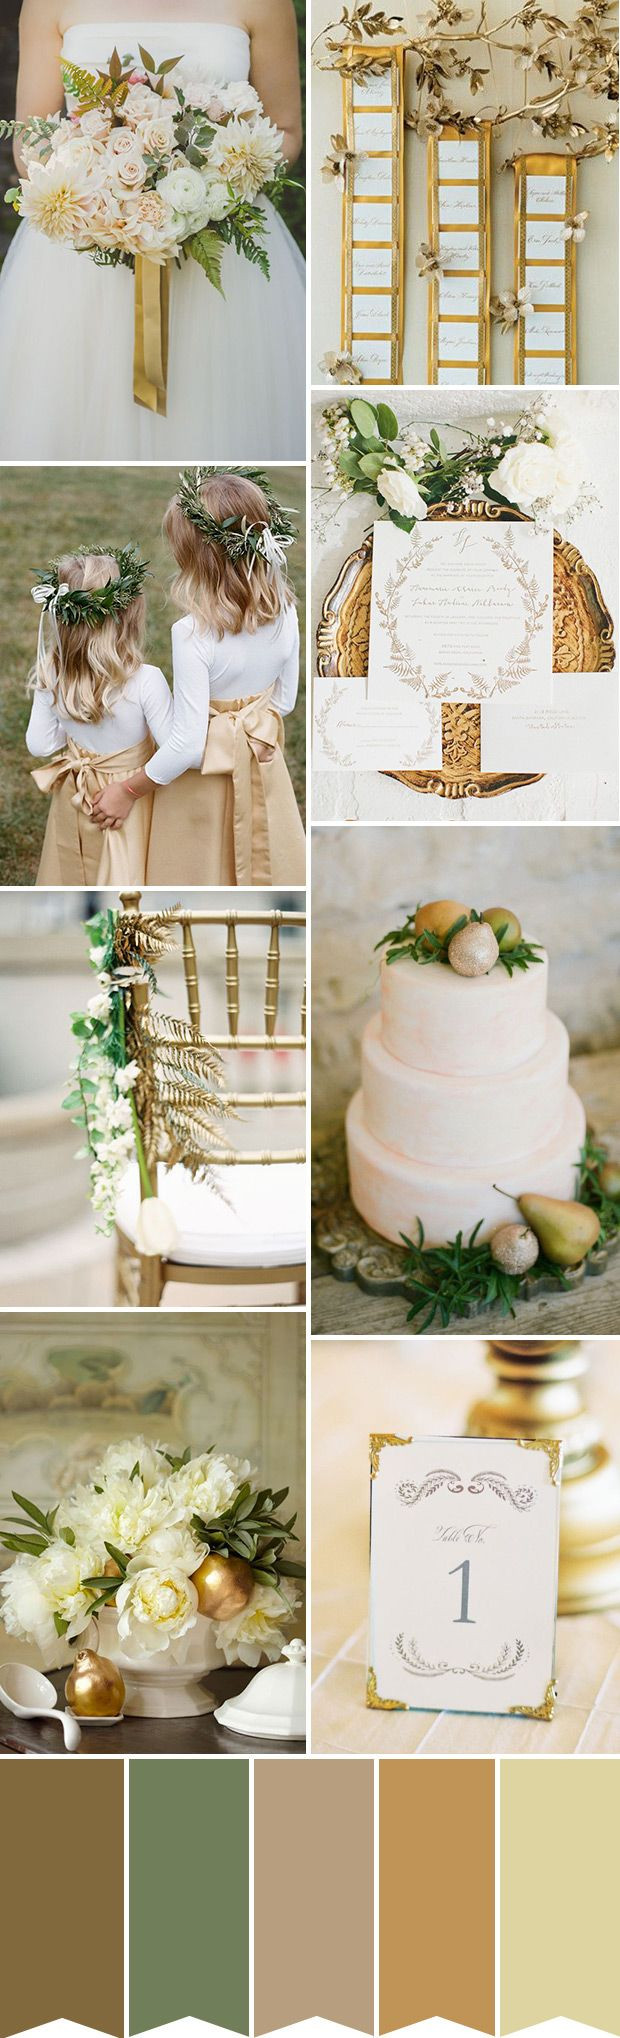 Wedding Color Schemes
 Popular Rustic Wedding Themes 2015 – BLOG